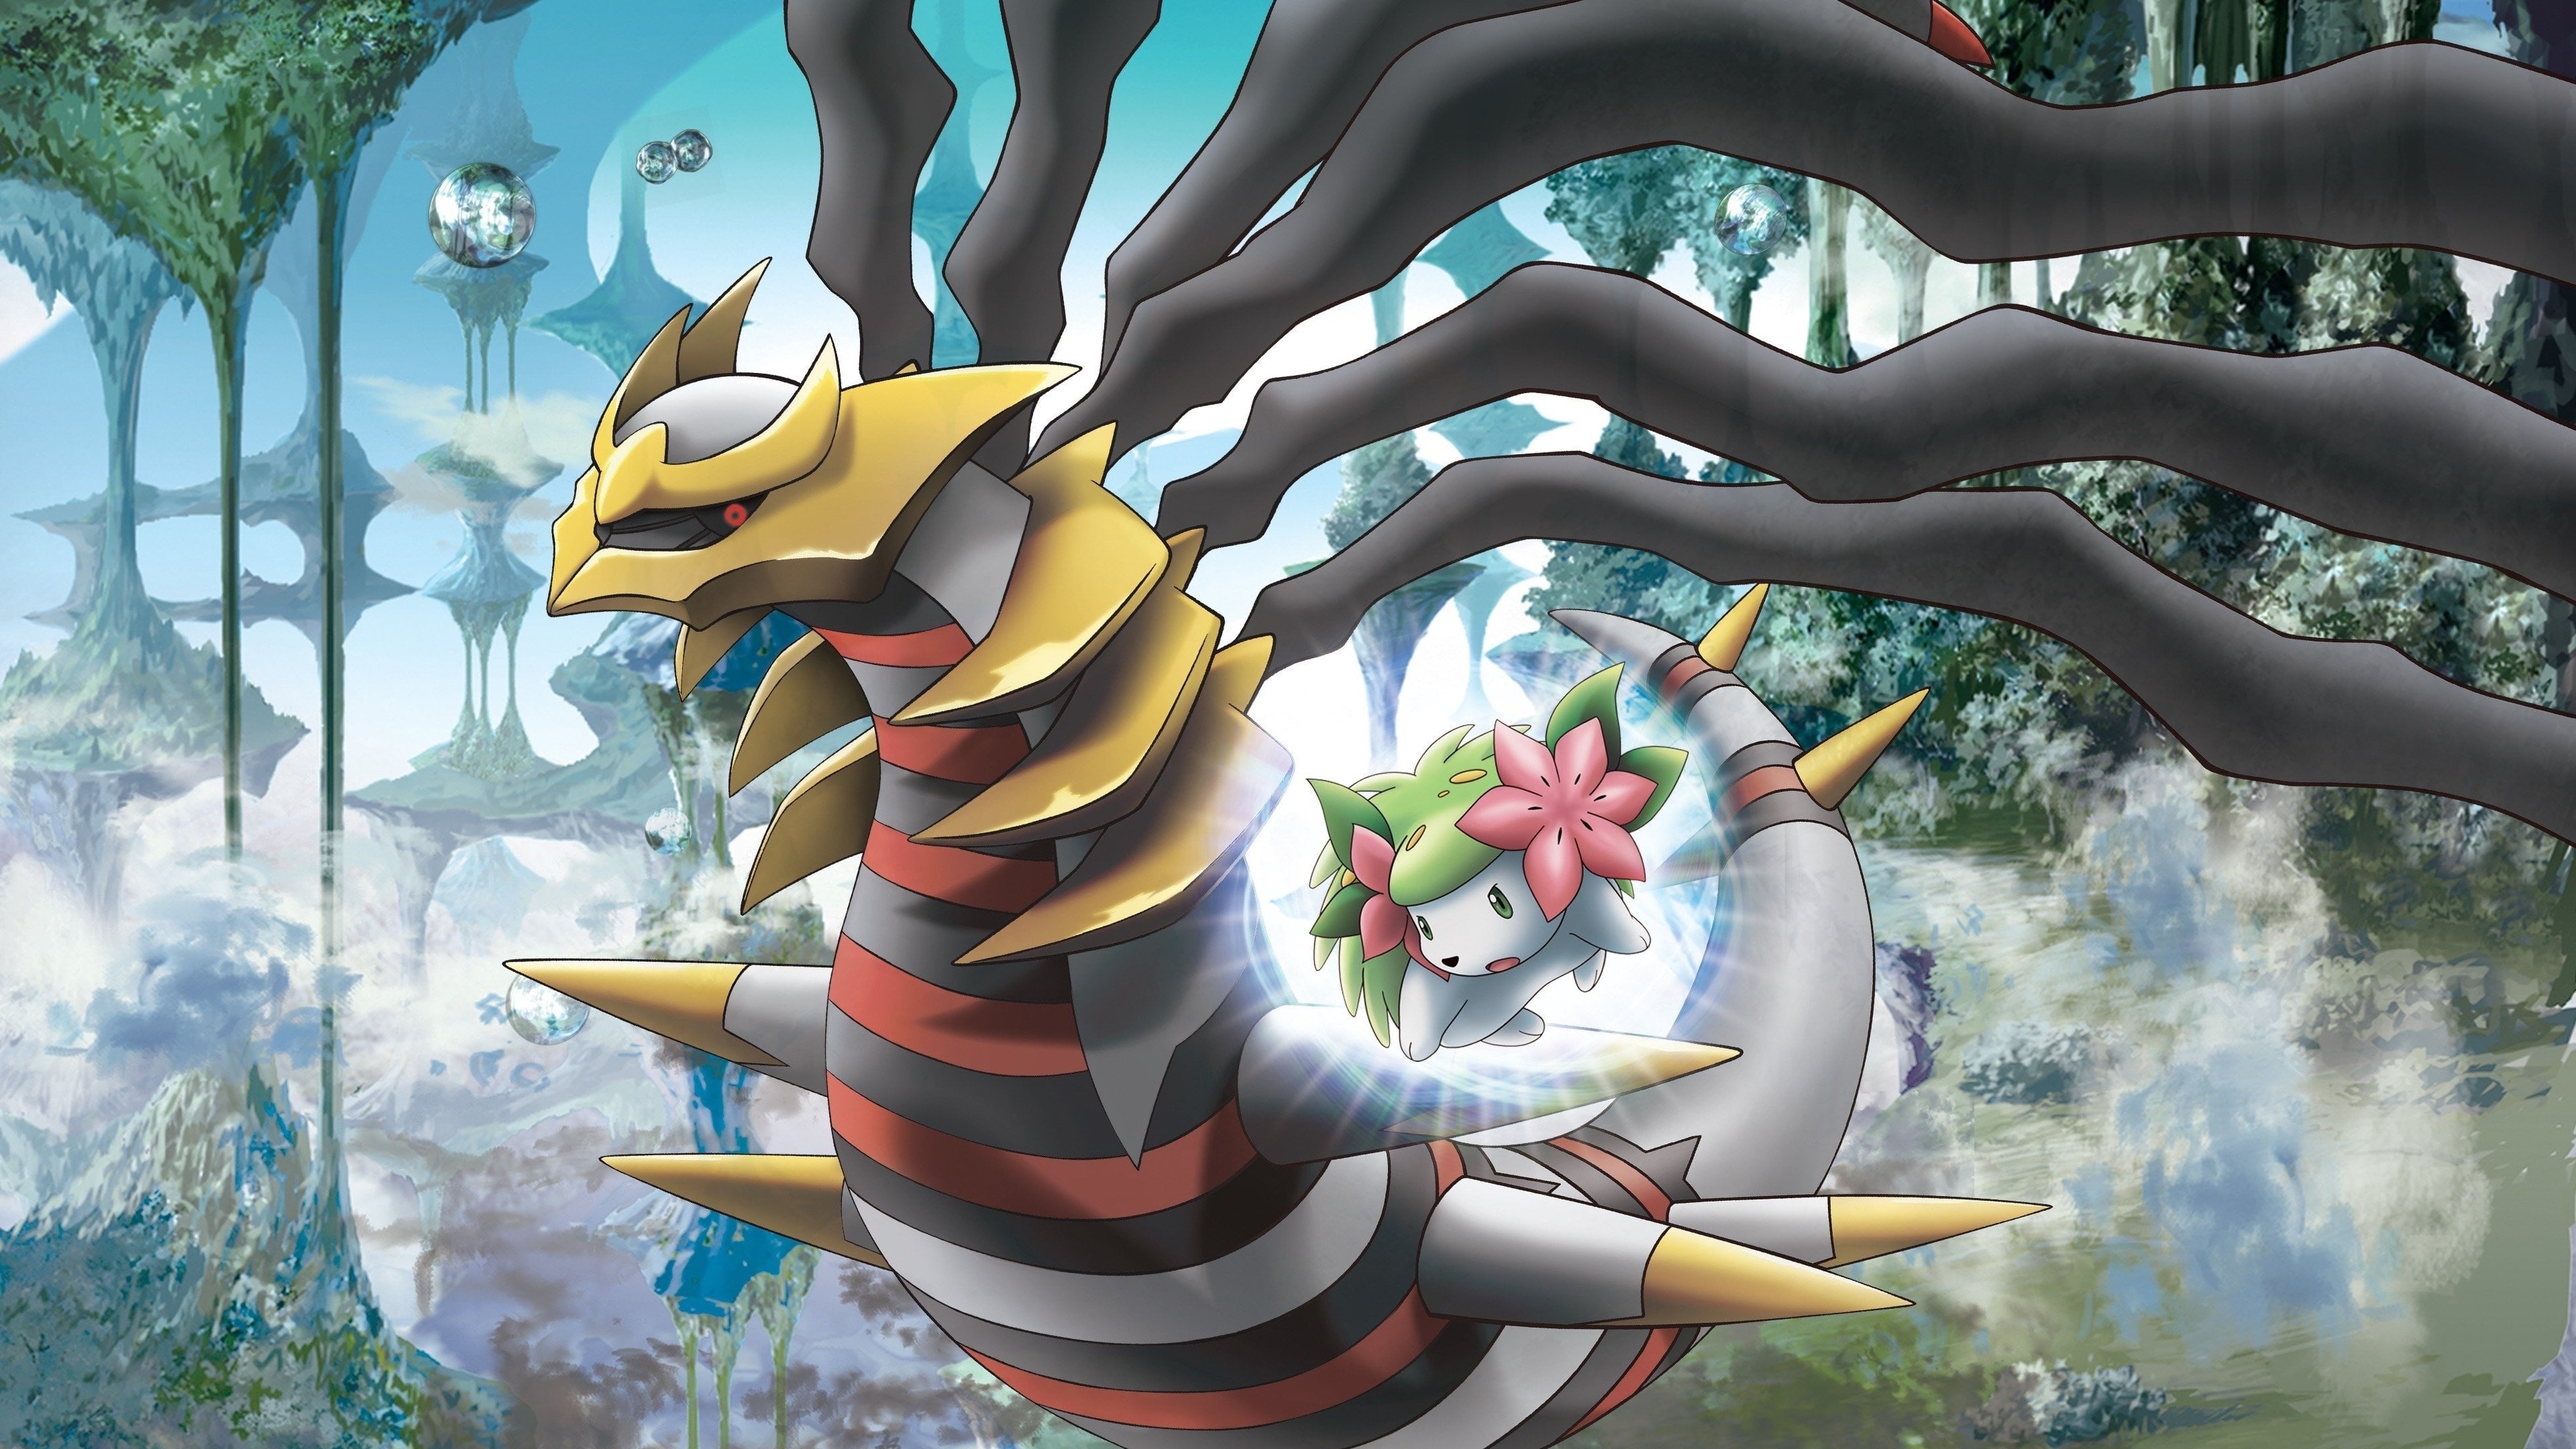 Pokémon: Giratina and the Sky Warrior, 2008. 